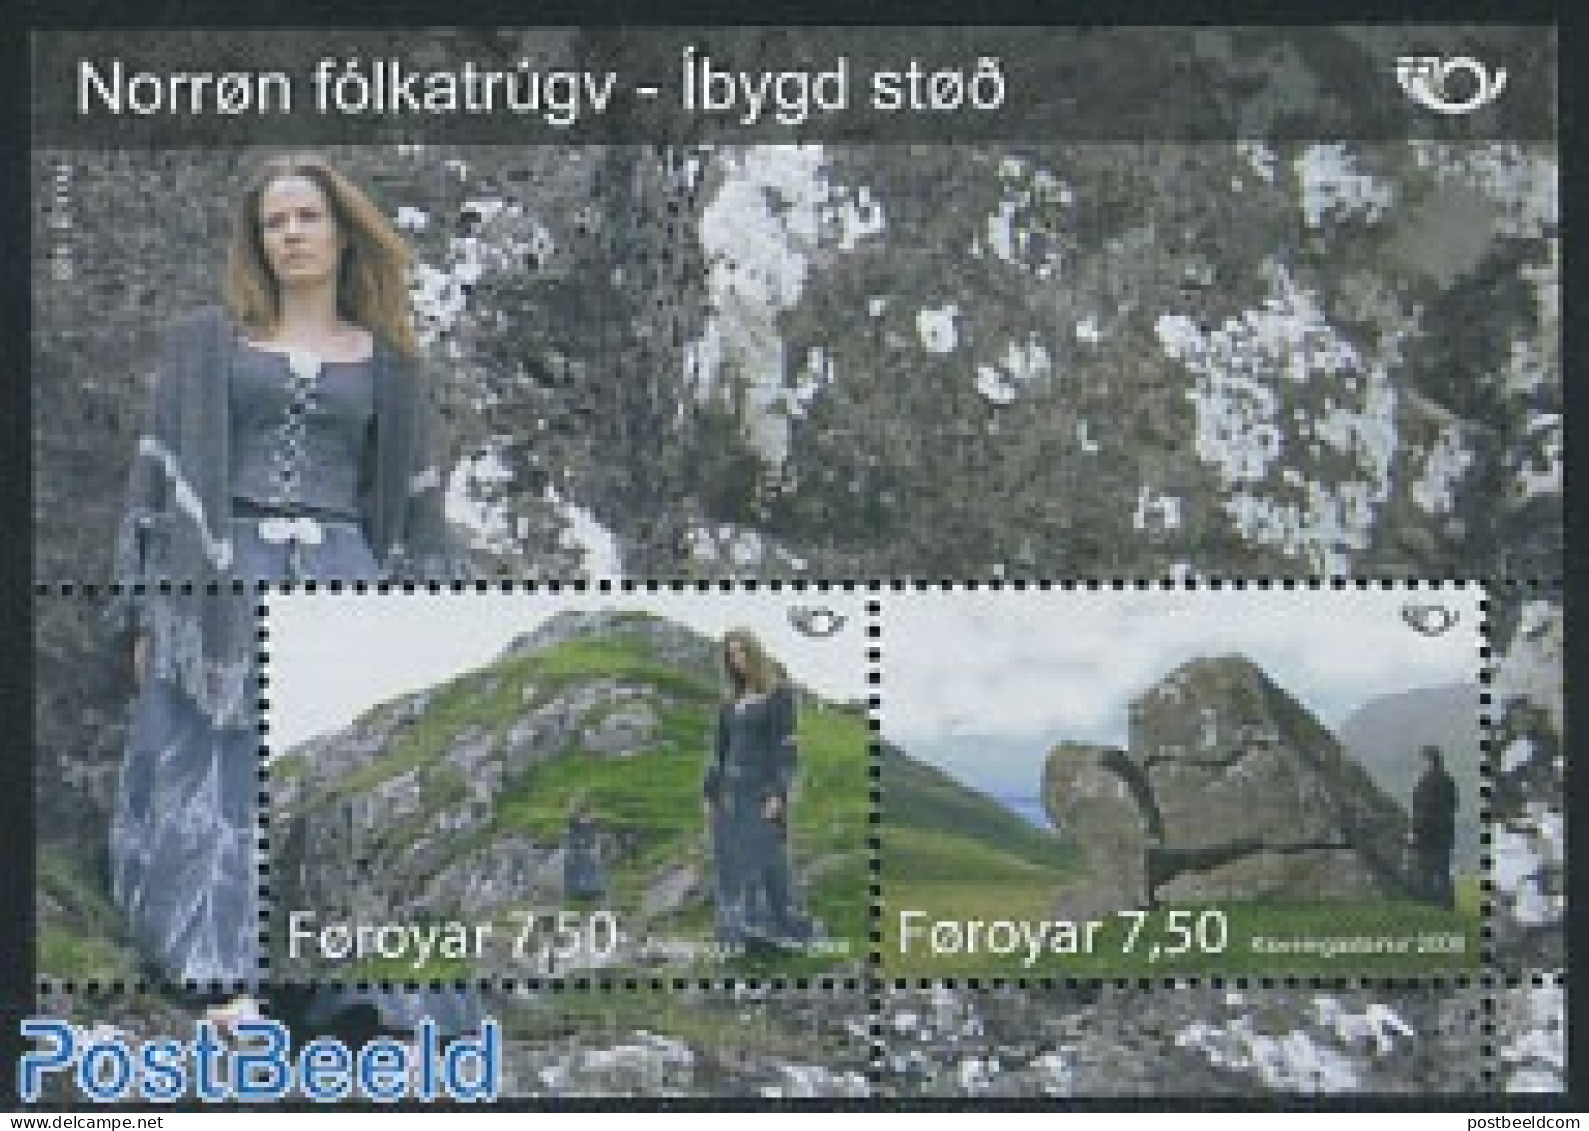 Faroe Islands 2008 Nordic, Mythology S/s, Mint NH, History - Europa Hang-on Issues - Art - Fairytales - Idee Europee